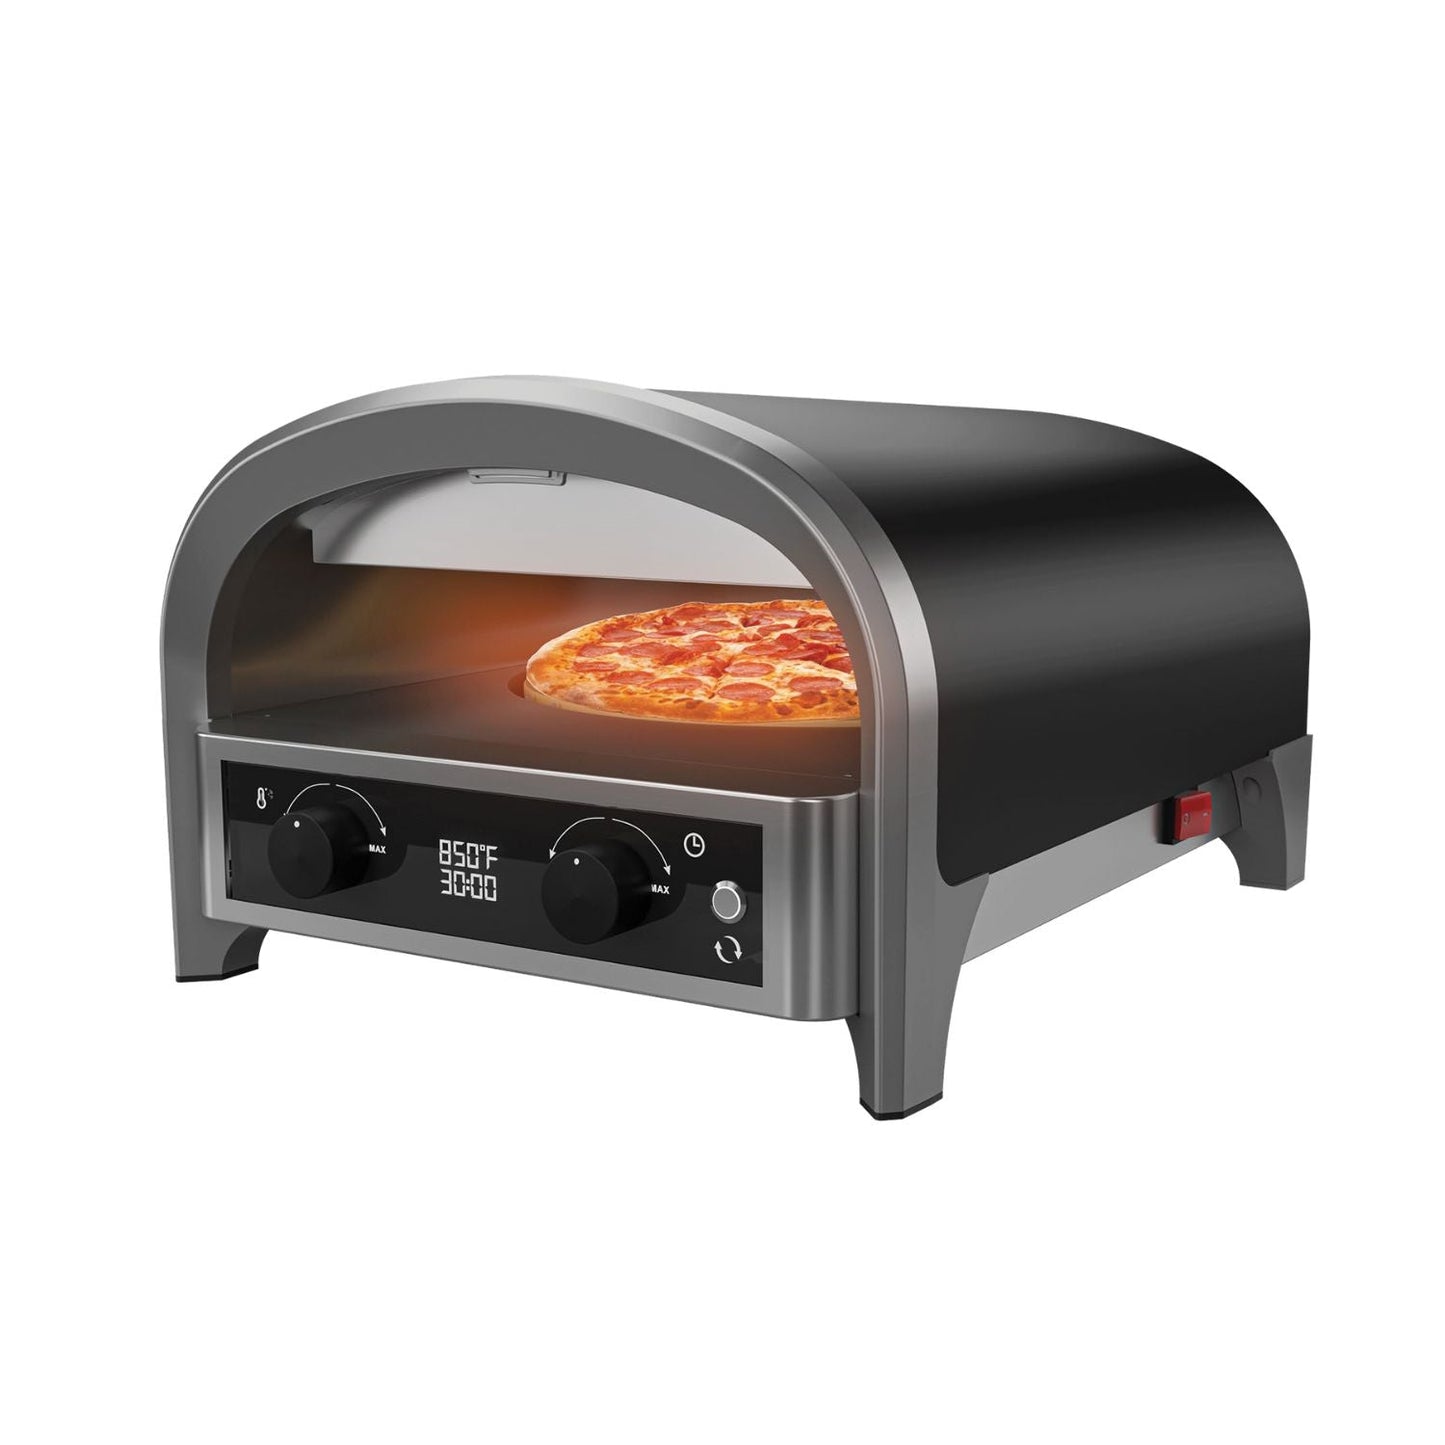 13" Digital Pizza Oven